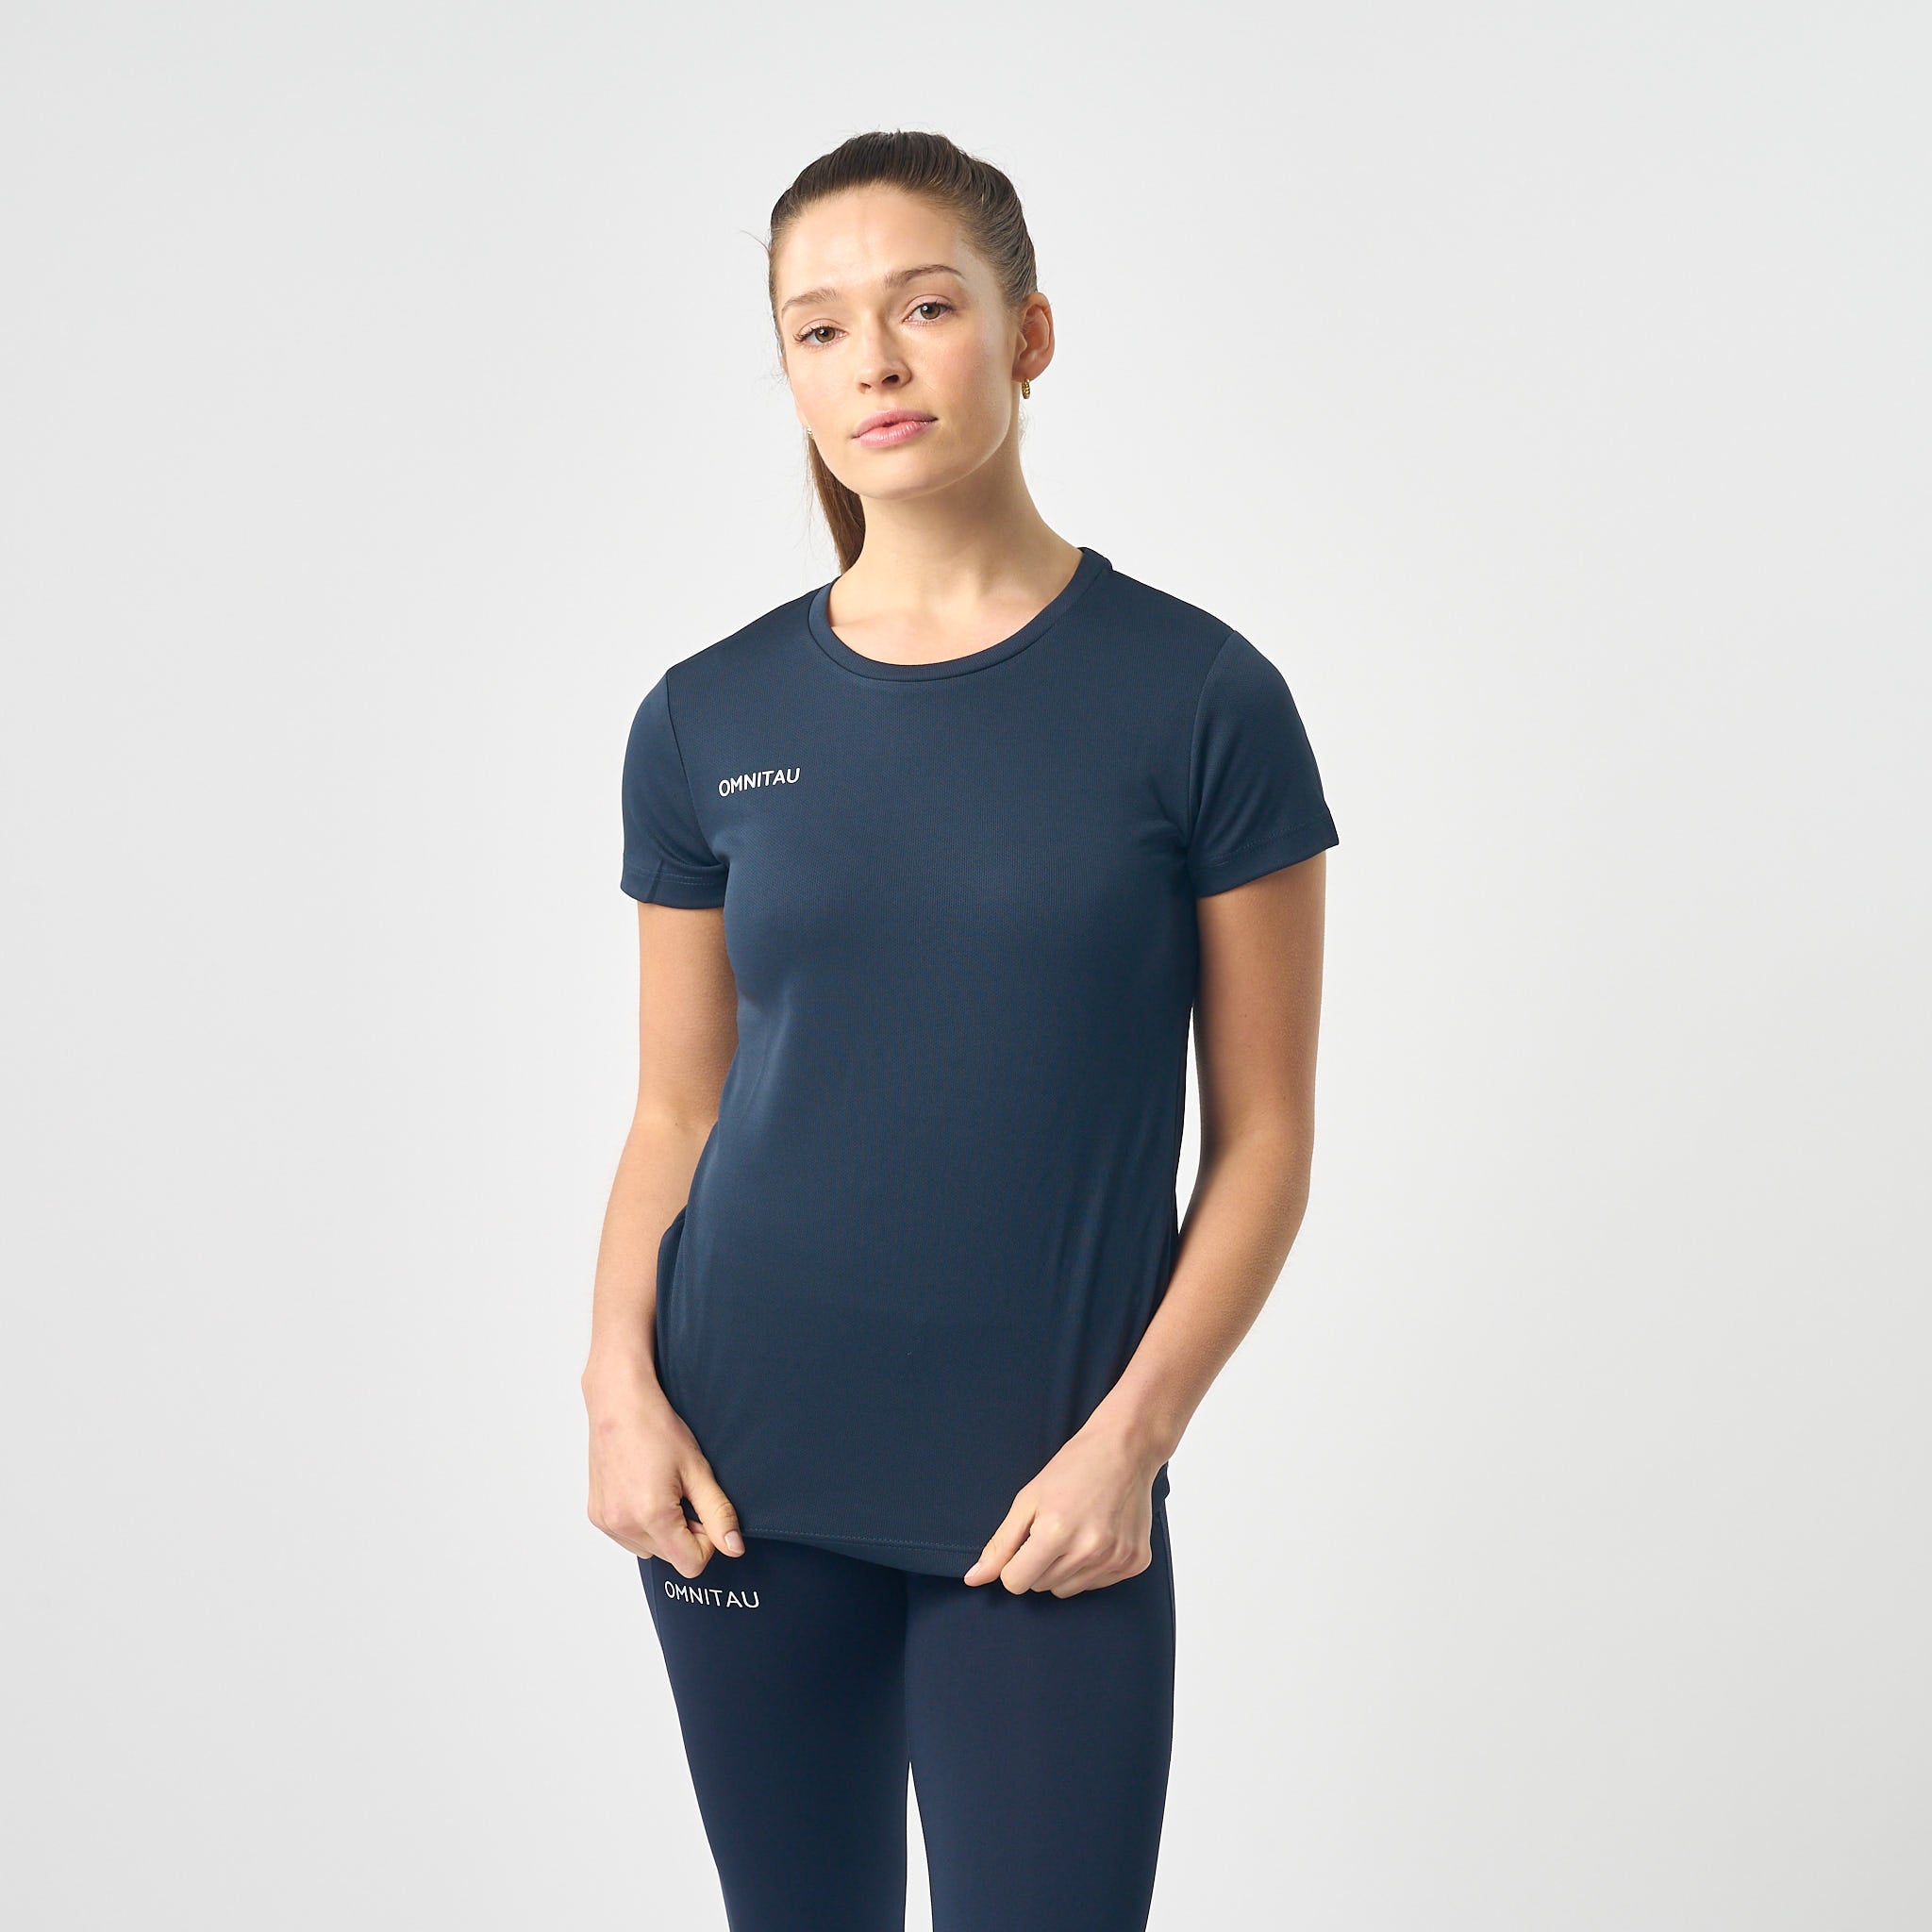 Omnitau Women's Team Sports Breathable Technical T-Shirt - French Navy